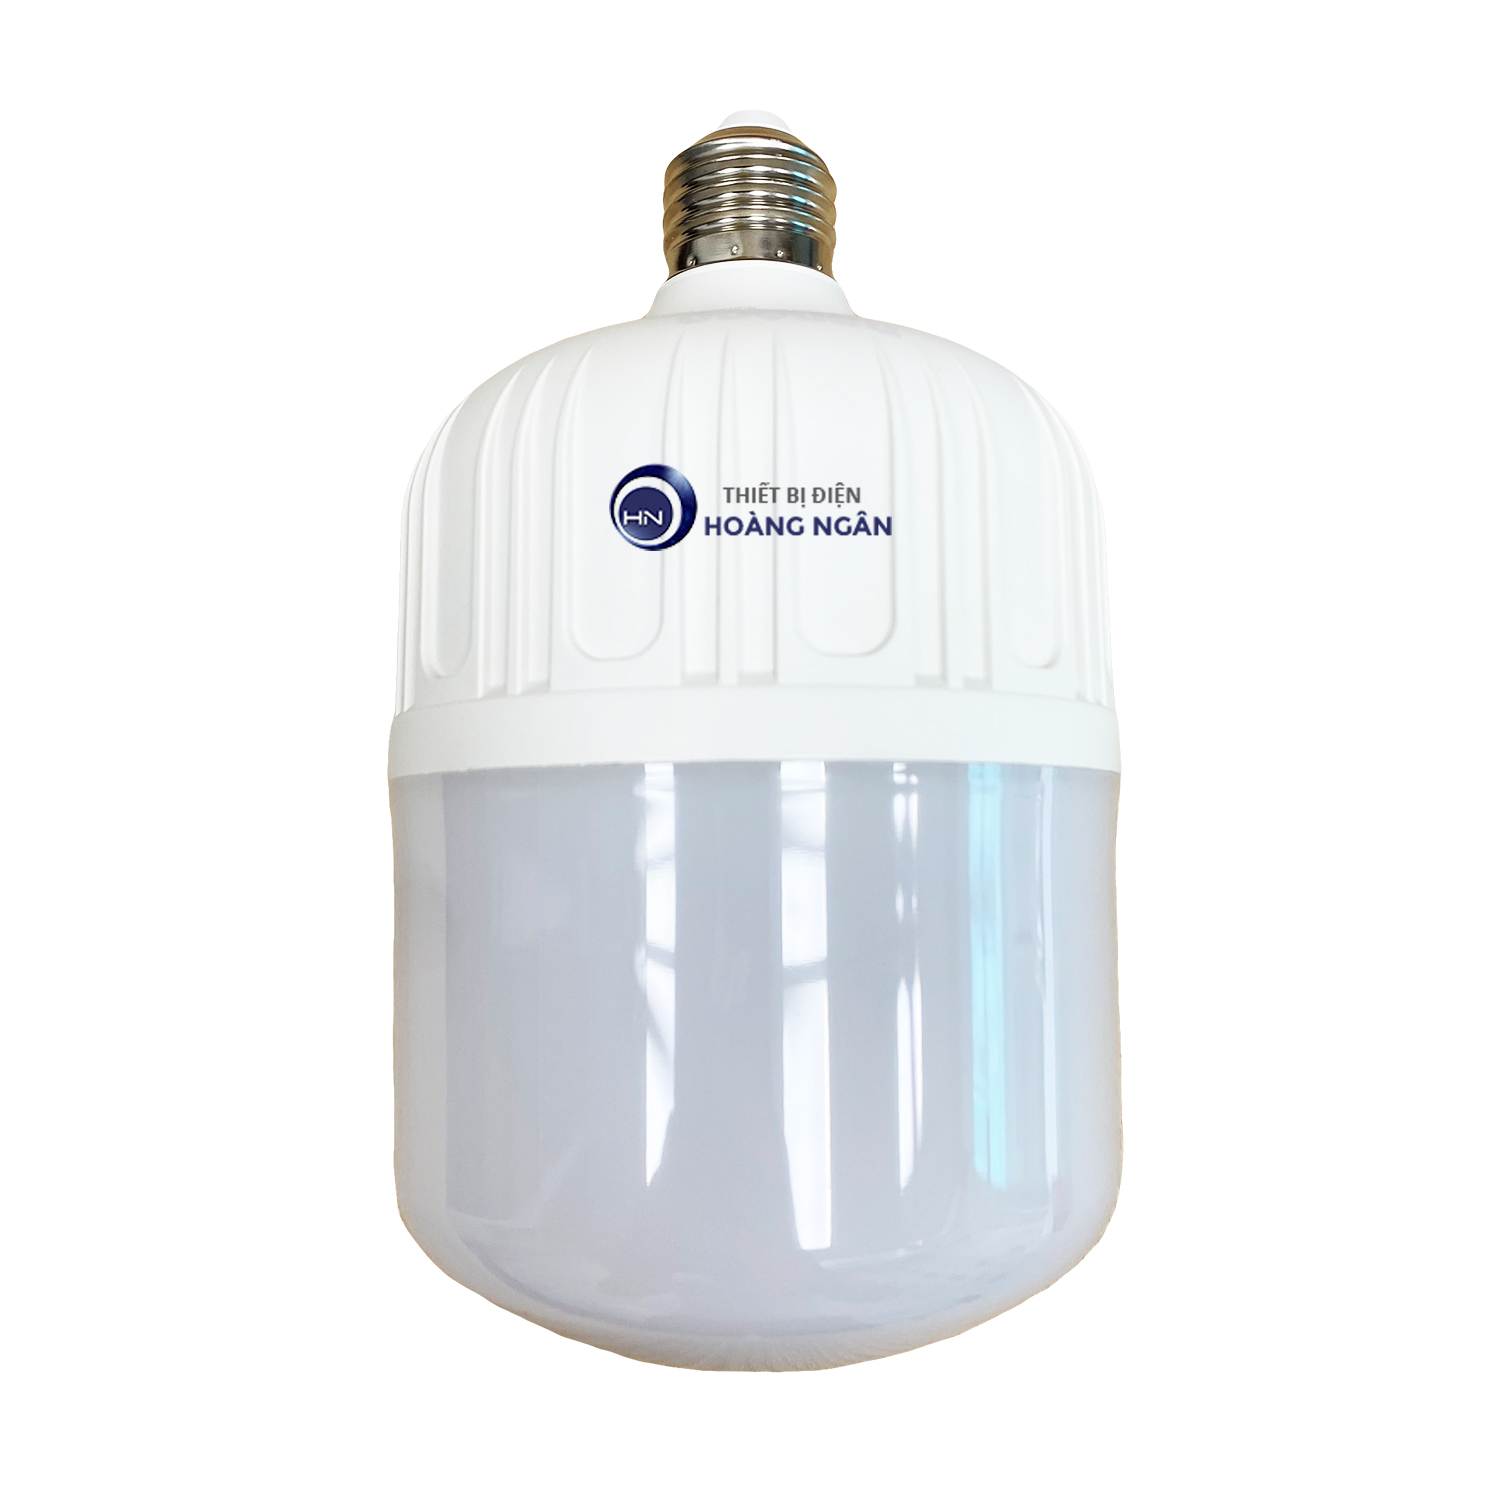 Bóng LED Bulb Trụ 20W NLBT206 E27 TITAN Series IP20 Nanoco